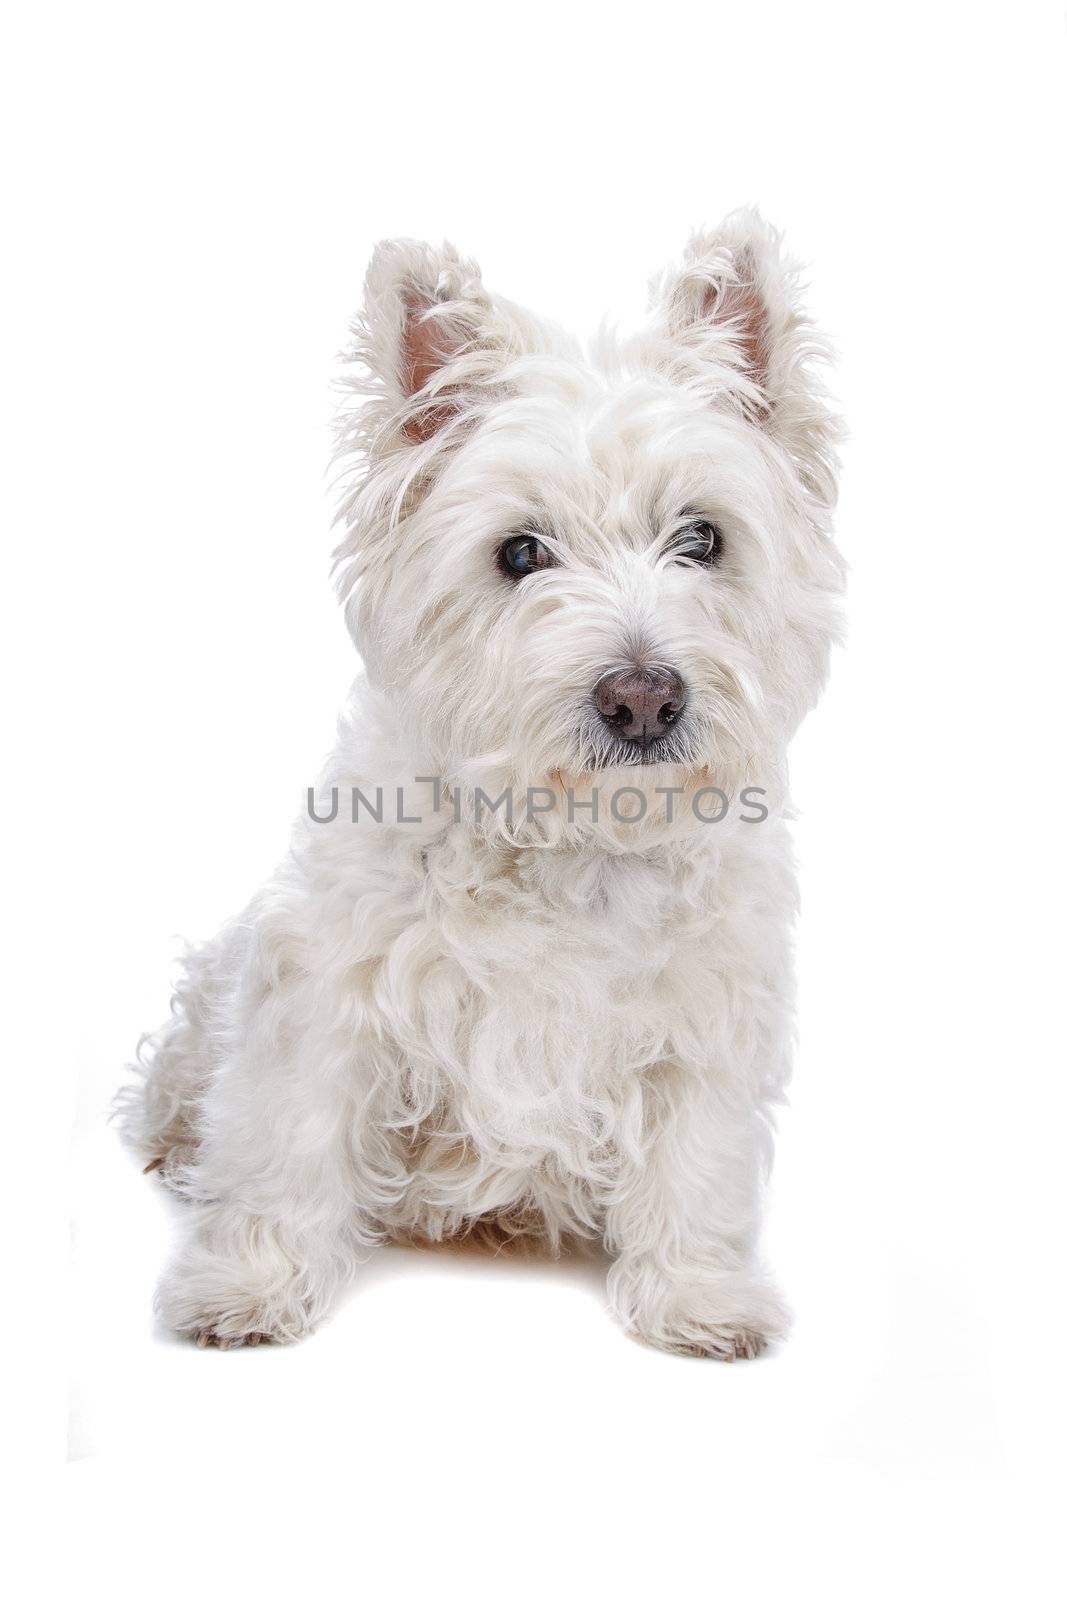 West Highland White Terrier by eriklam